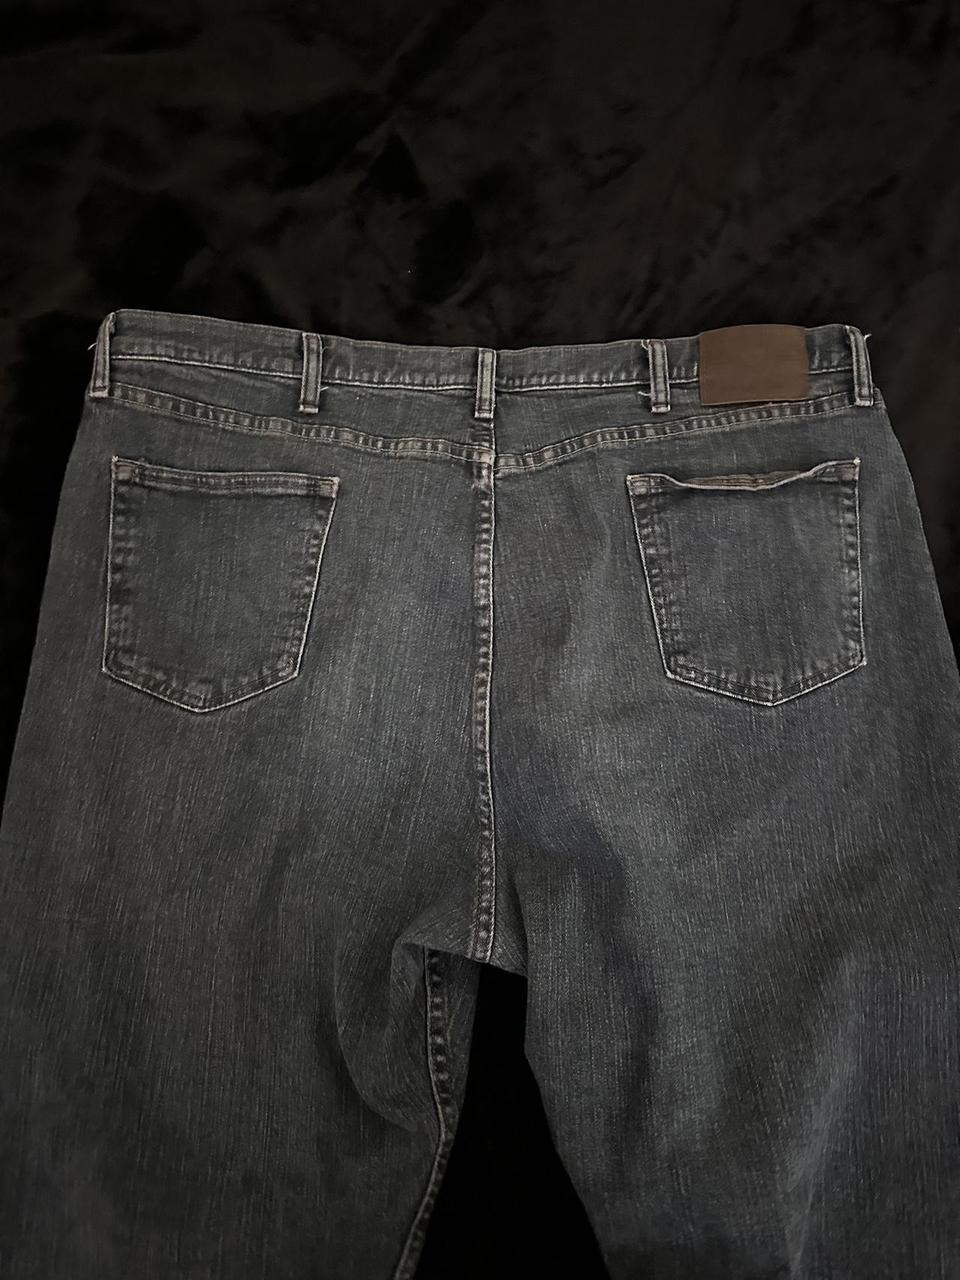 ೃ⁀ Wrangler Authentic Jeans -Worn -Size 44x30 -I’m 5’6 - Depop